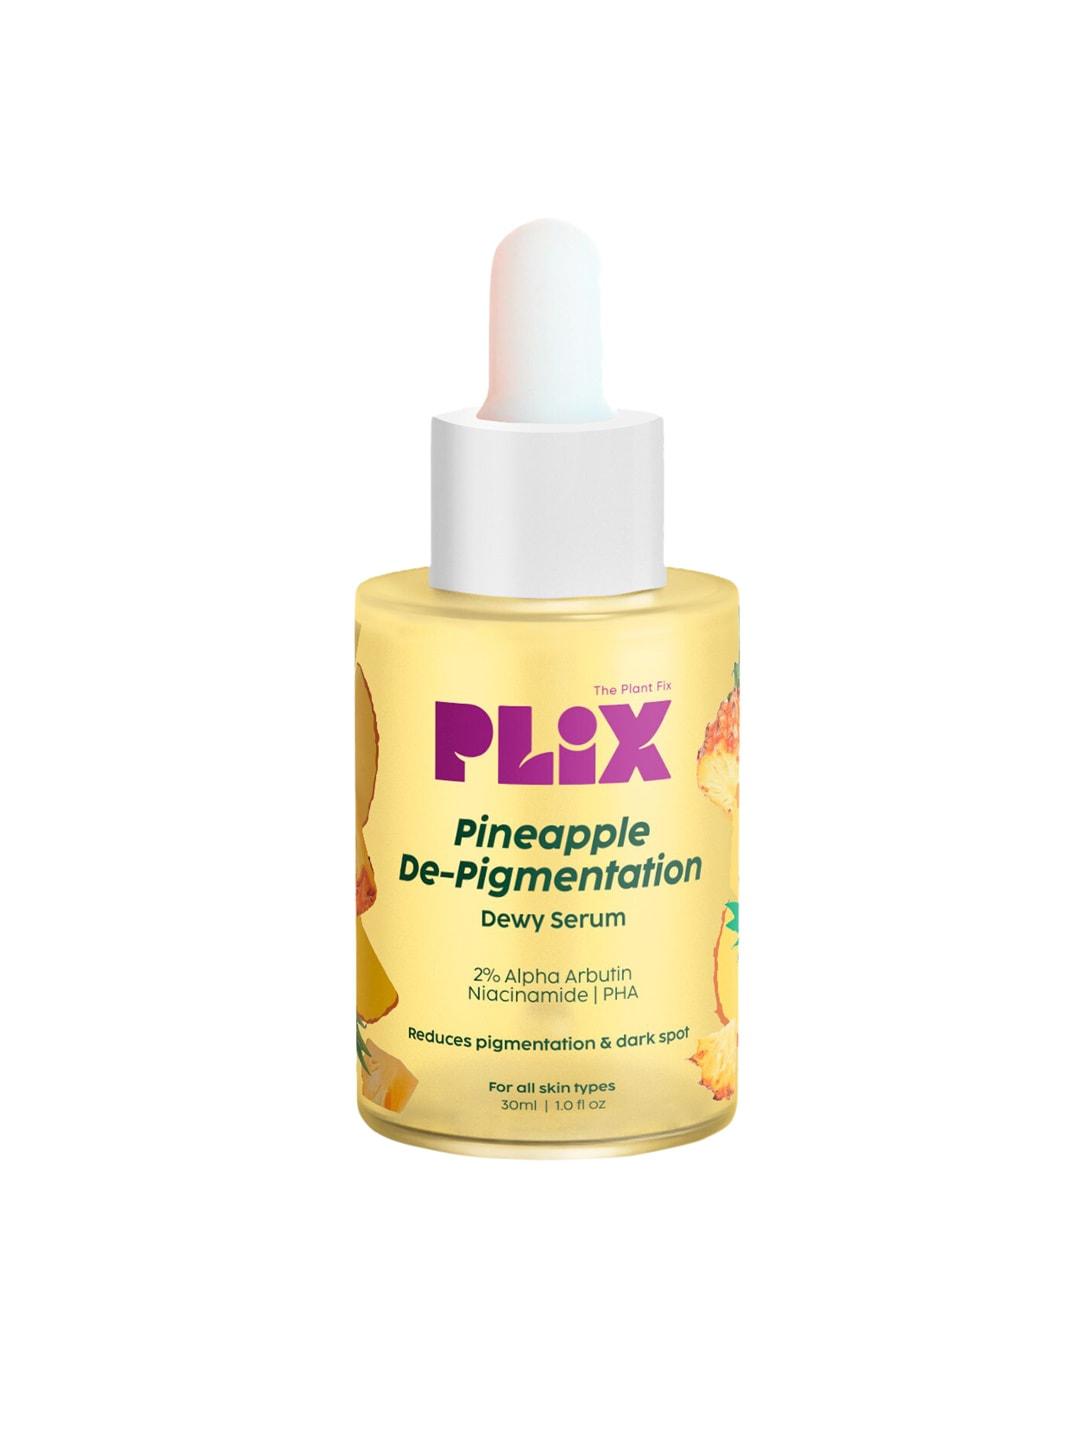 plix the plant fix pineapple de-pigmentation dewy serum with alpha arbutin - 30 ml